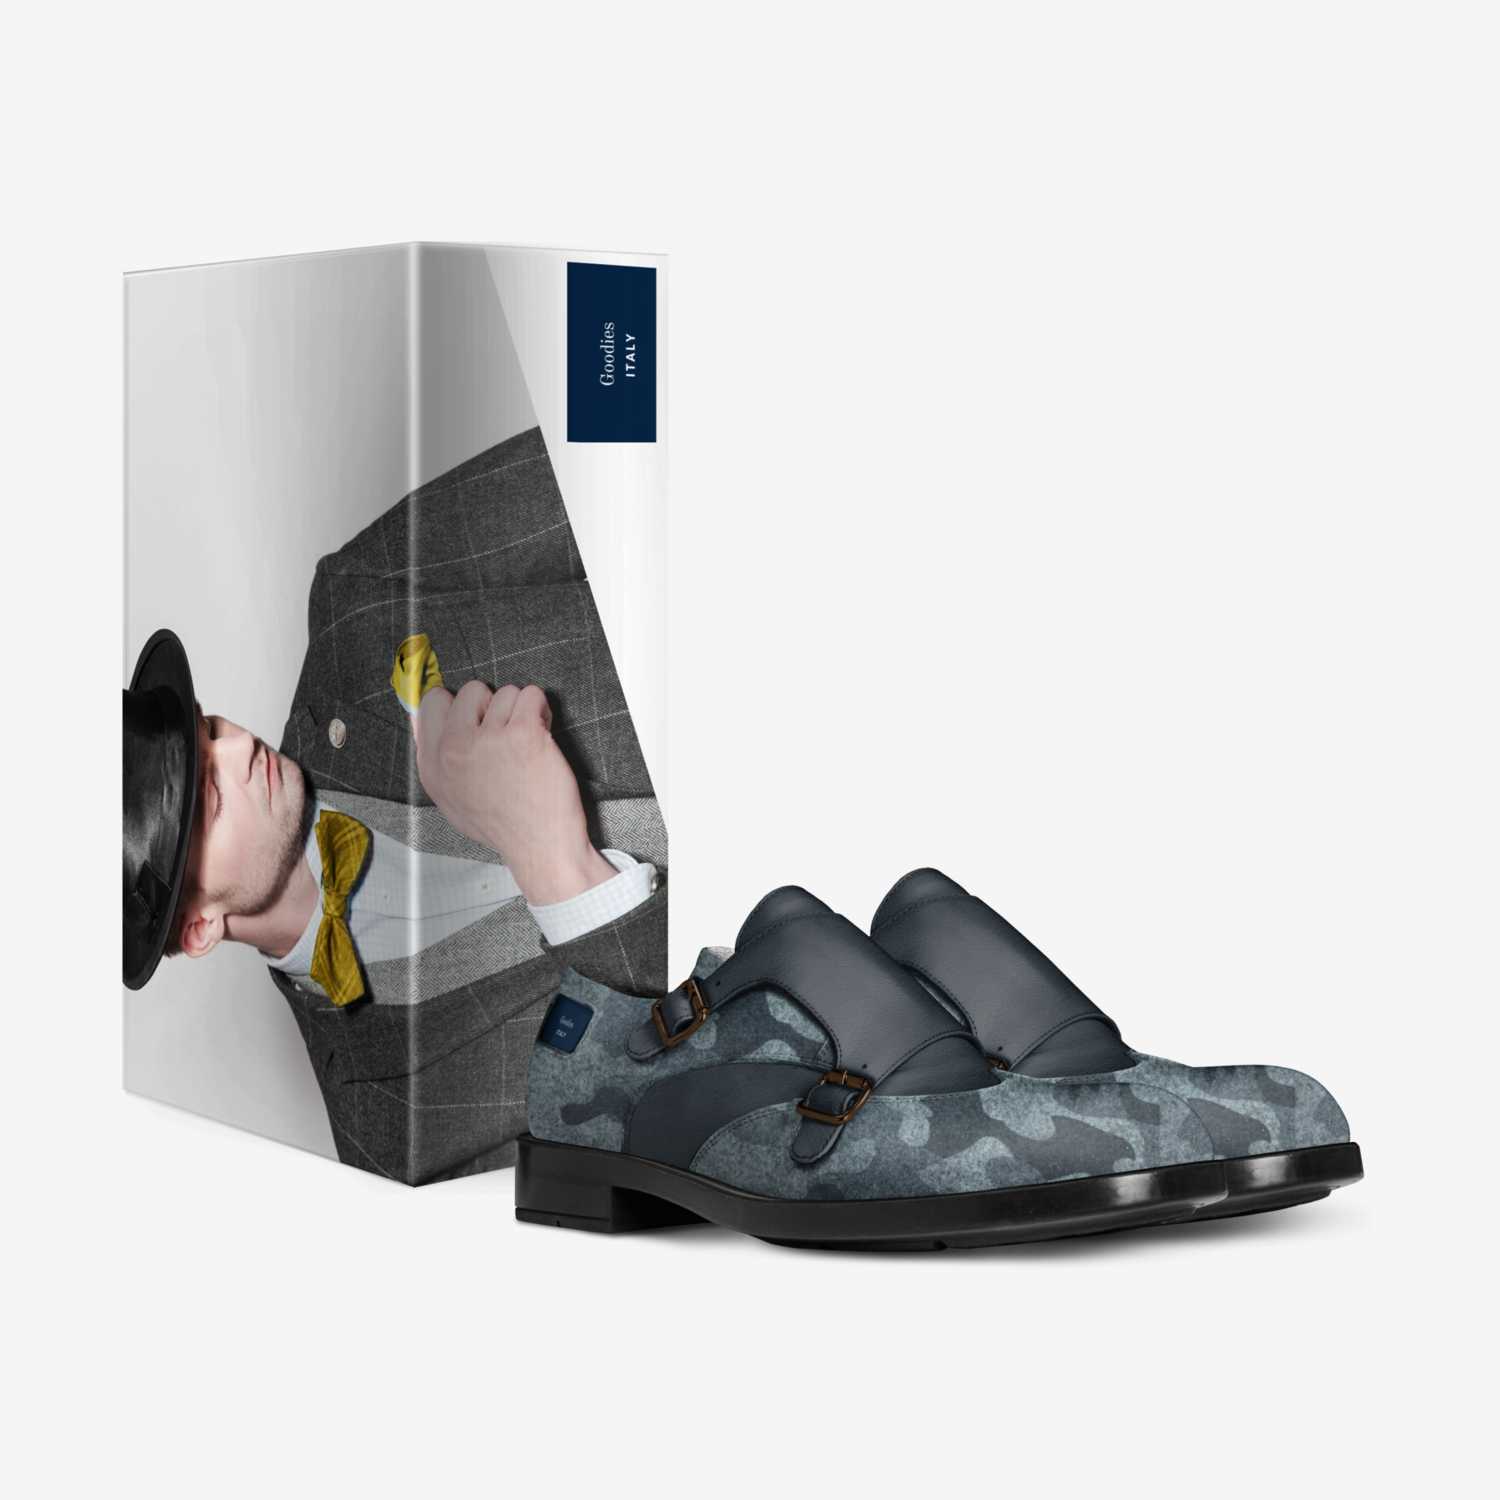 Goodies custom made in Italy shoes by Moffatt Gordon | Box view